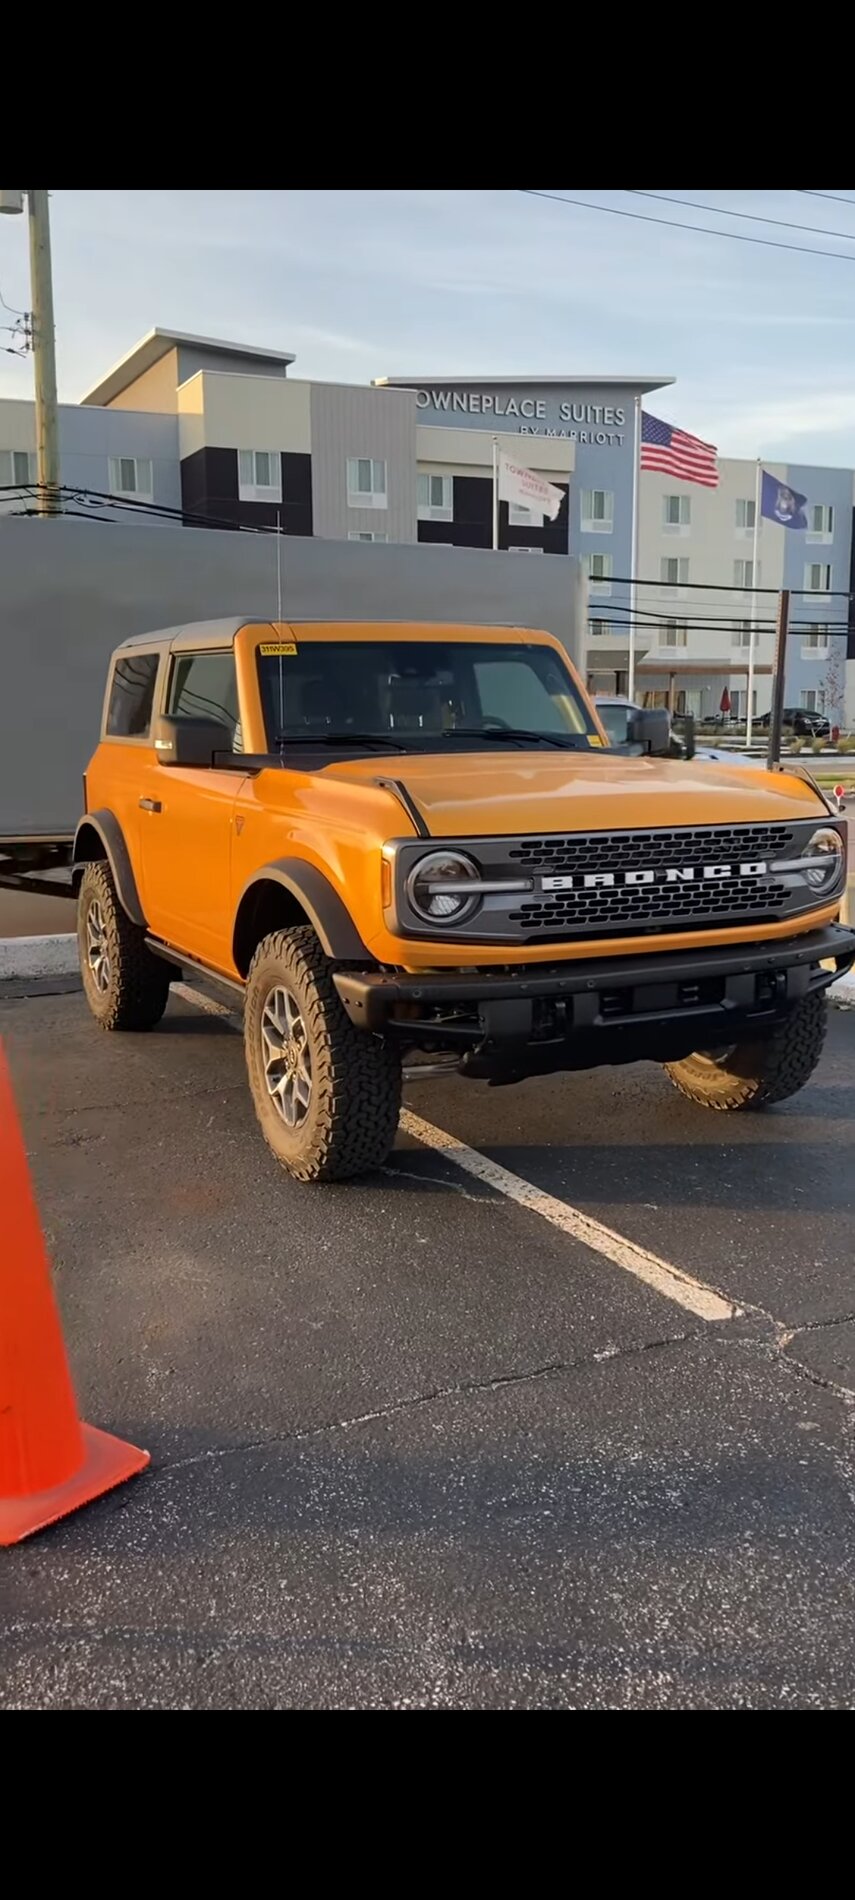 Ford Bronco In the wild: Cyber Orange 2dr Badlands w/ base wheels Screenshot_20201209-040218_YouTube